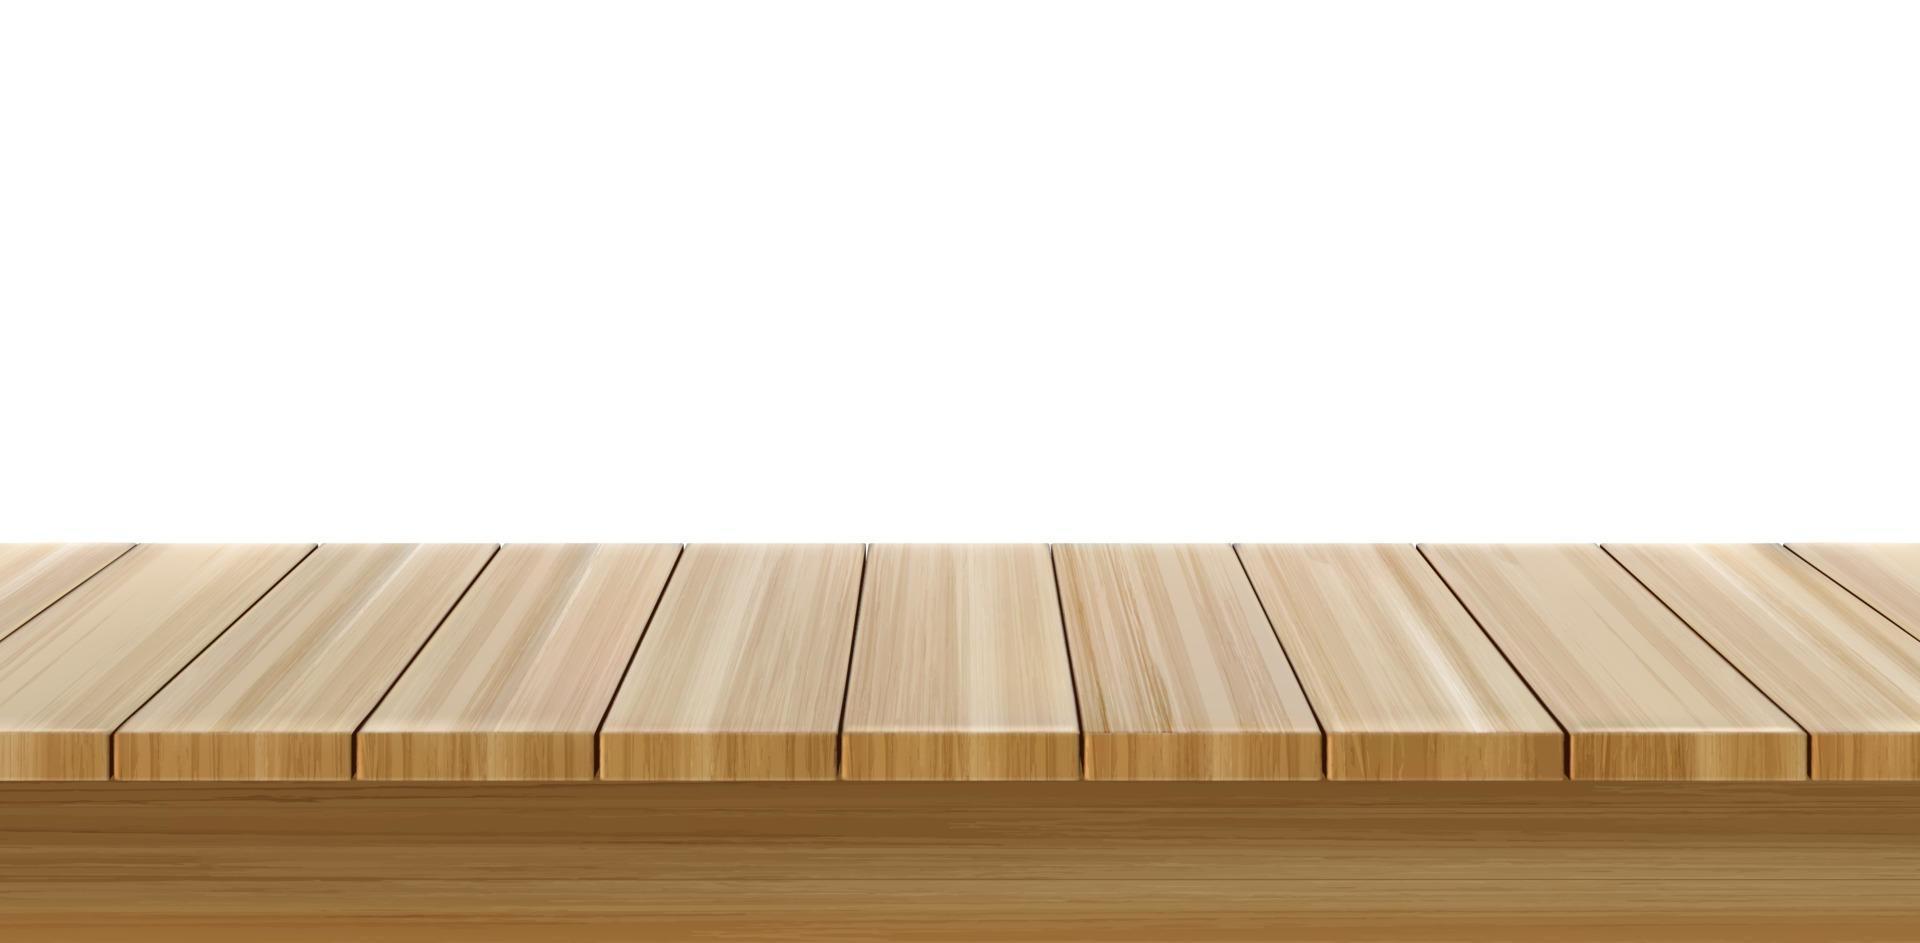 primeiro plano da mesa de madeira, vista frontal da mesa de madeira vetor